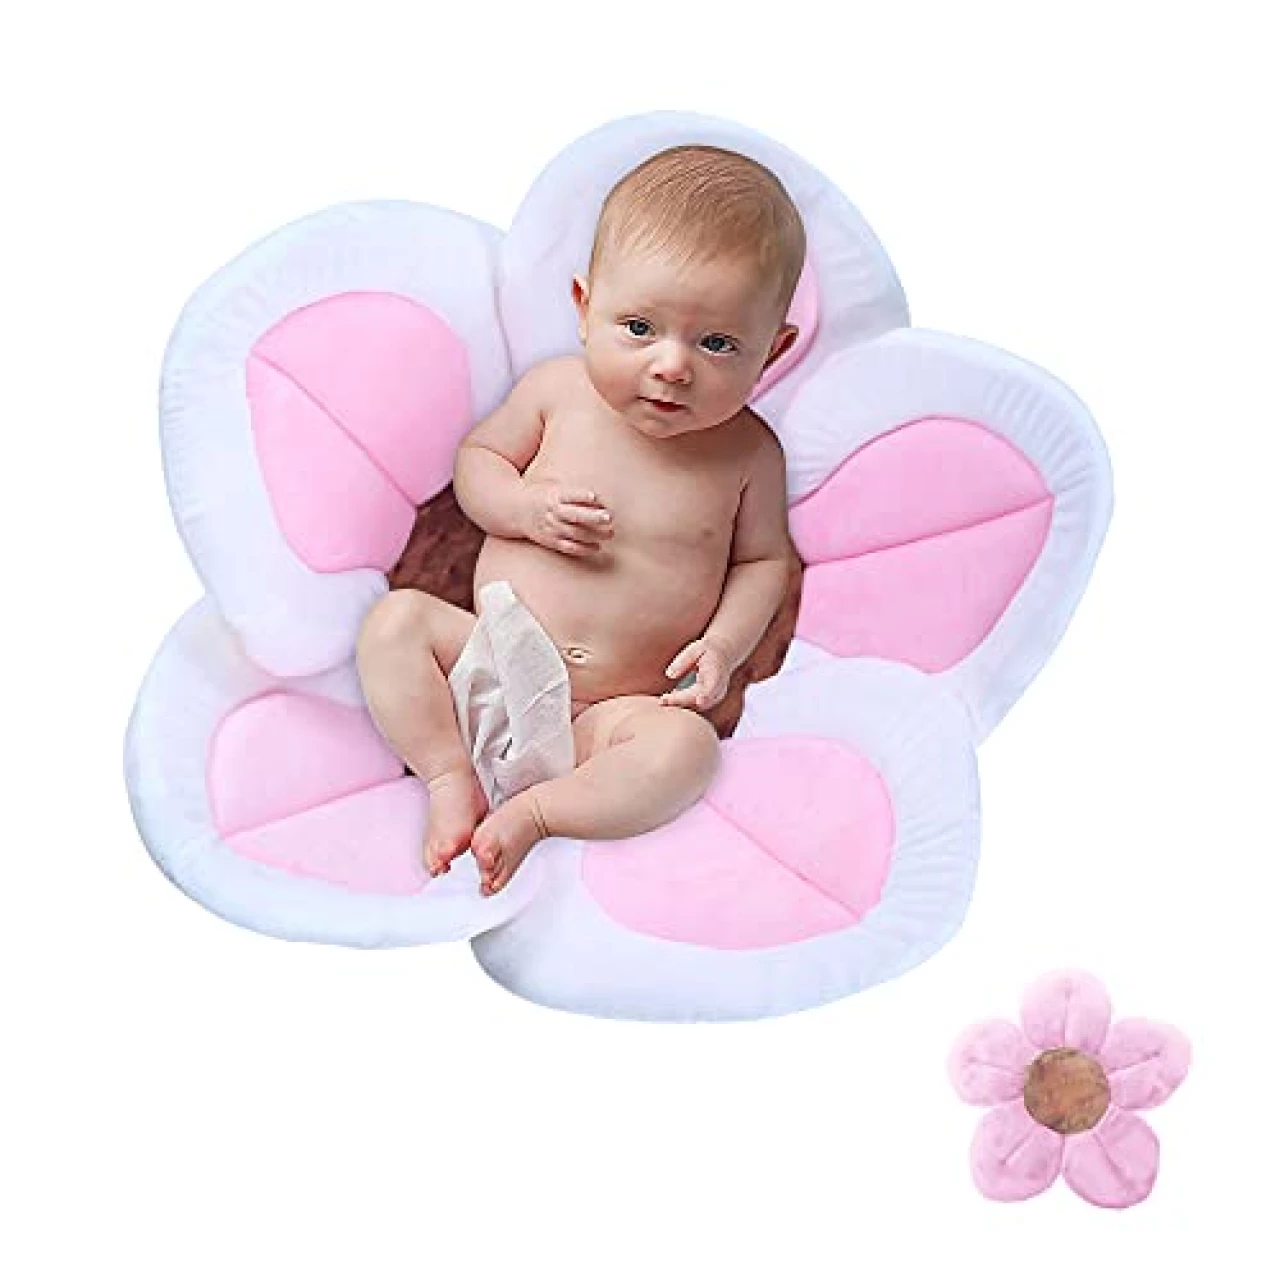 Baby Bath Flower Soft Cushion Non-Slip Safety Sink Insert Tub Creative Play-mat 0-12 Months